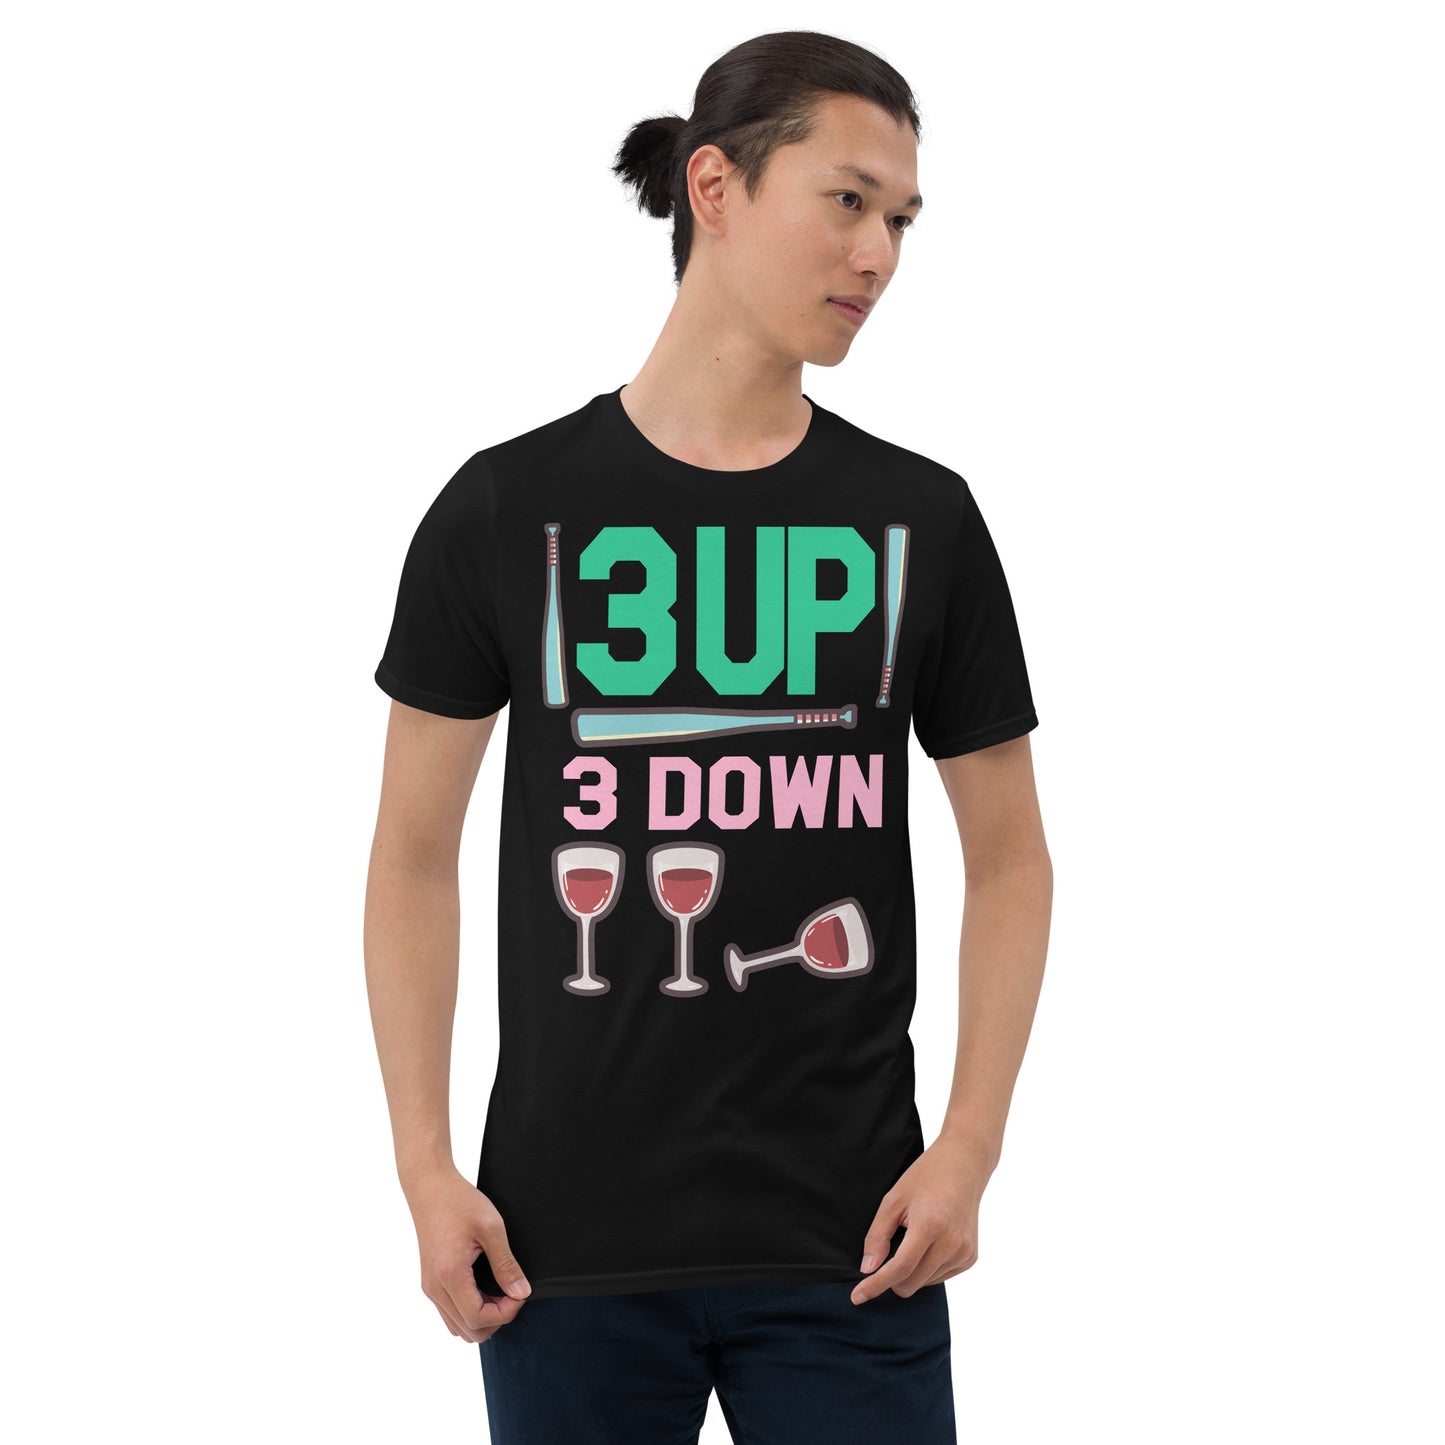 3 Up 3 Down Premium Unisex T-Shirt